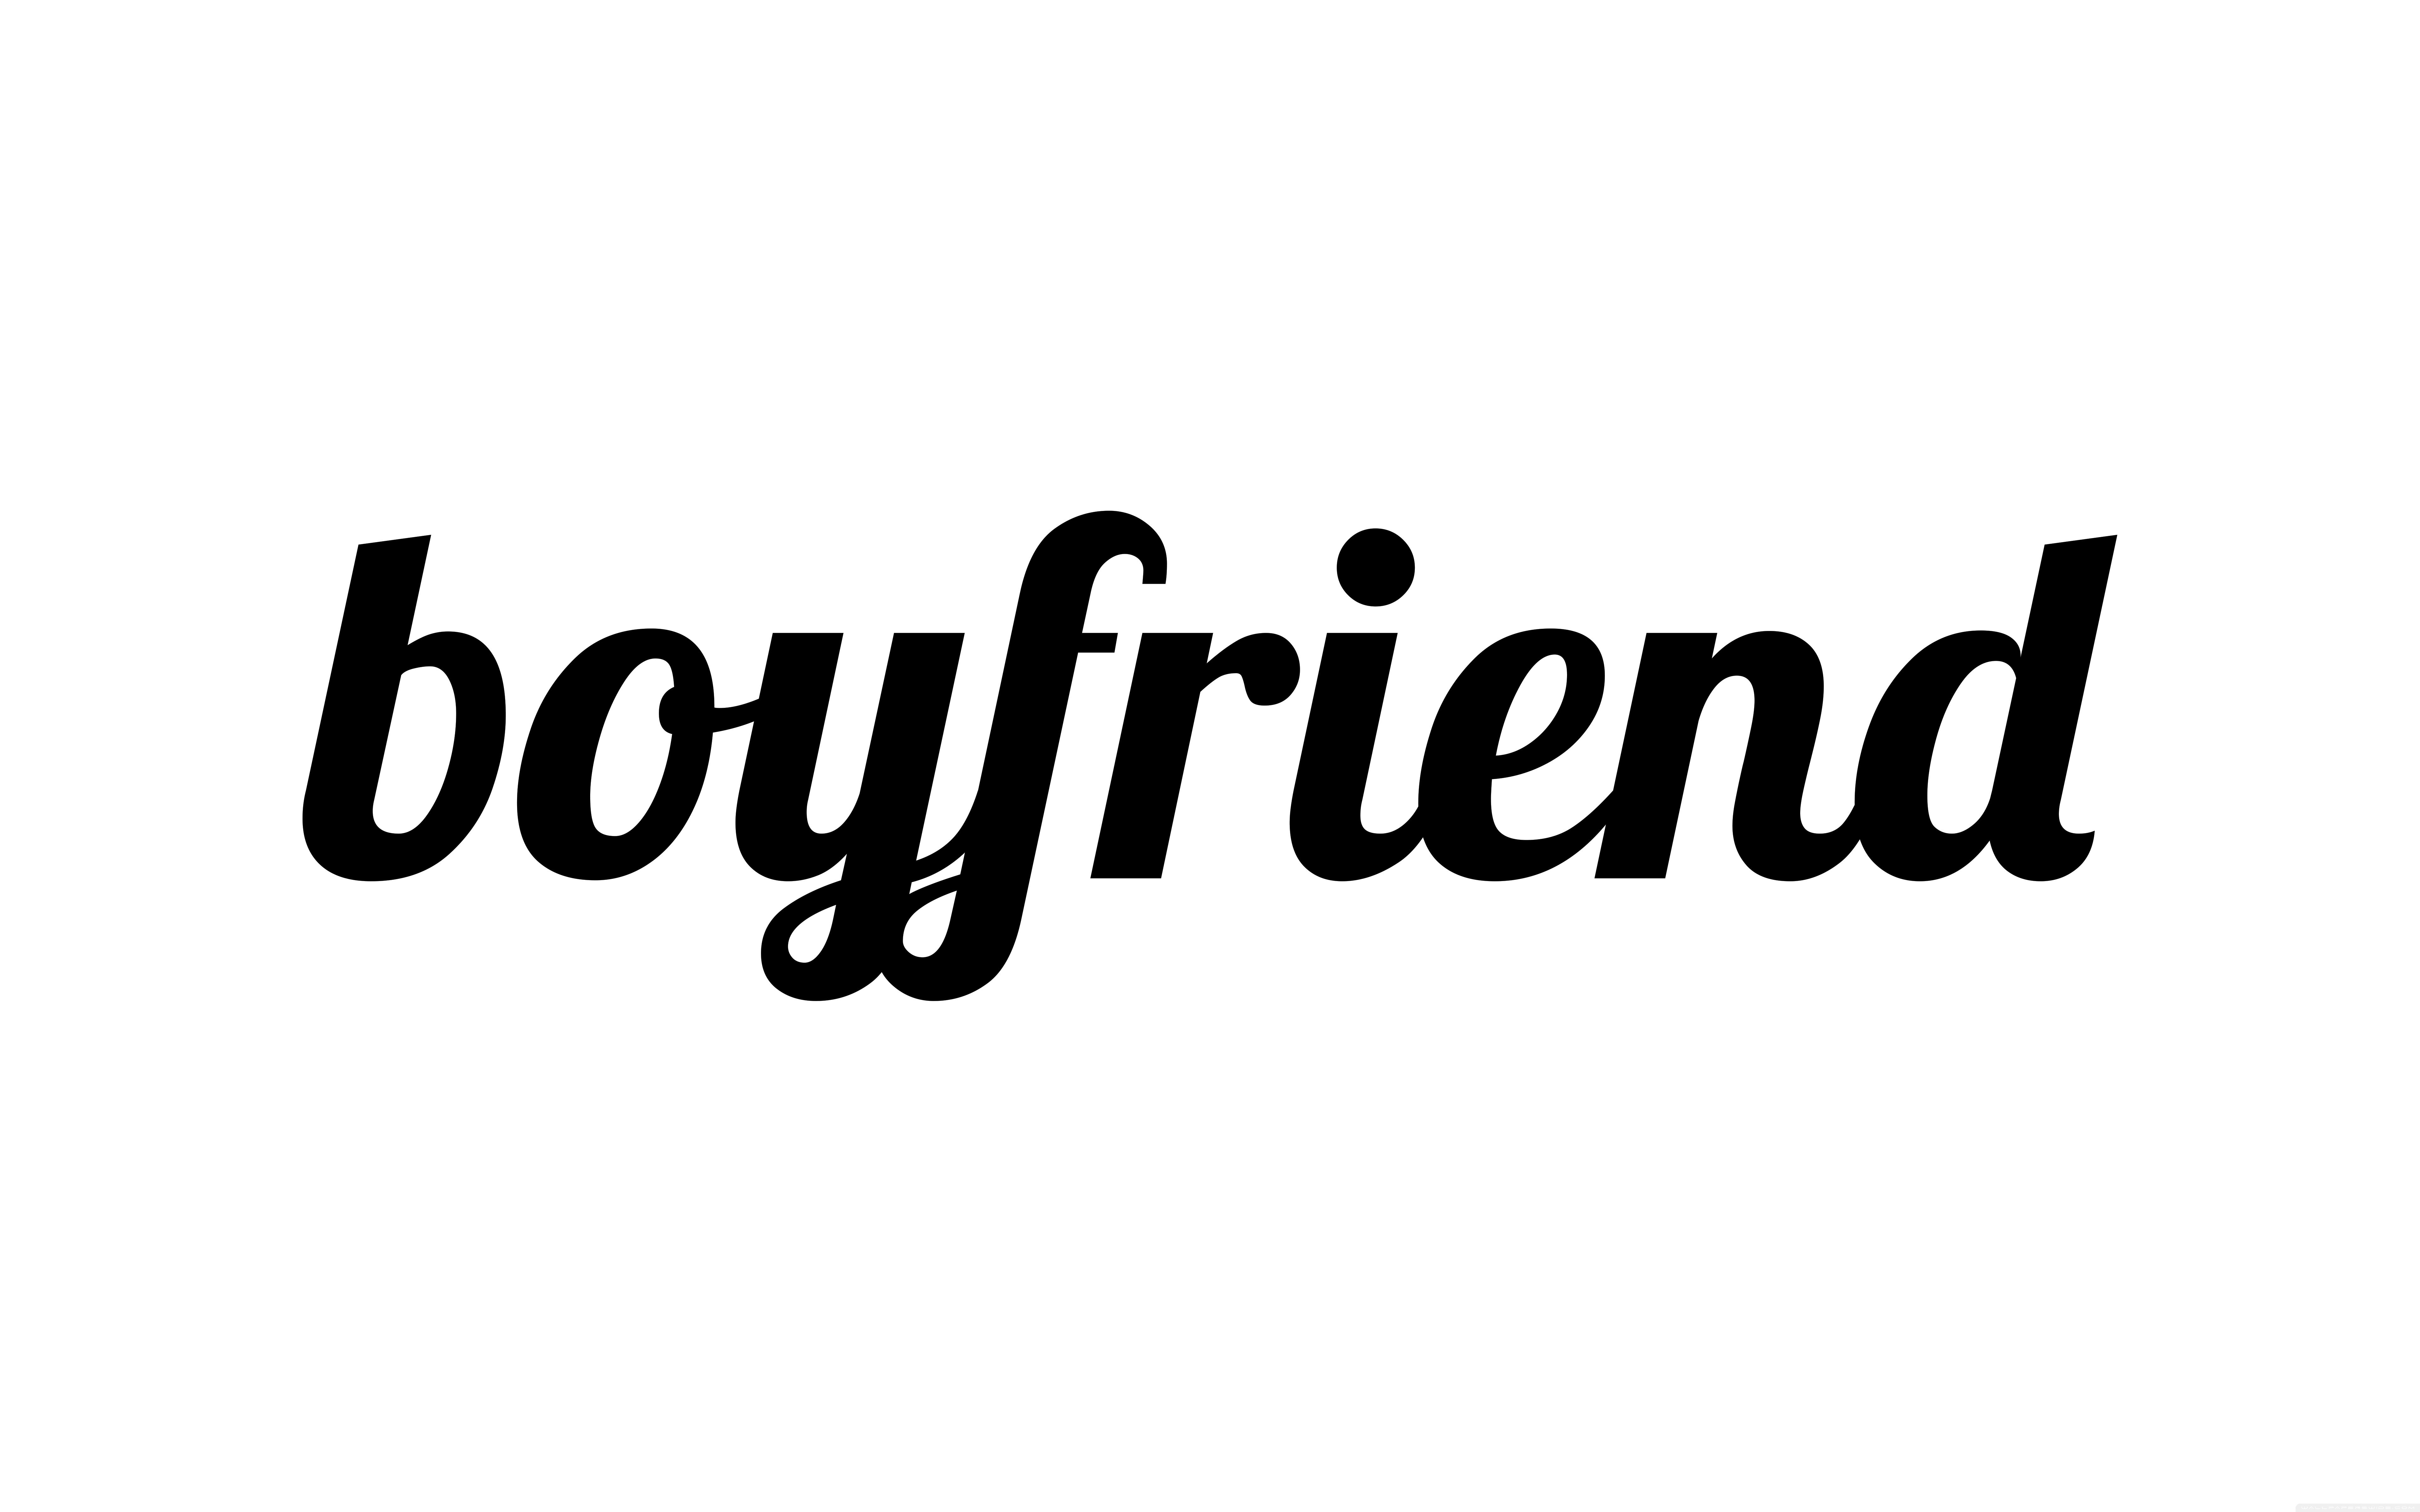 25+] Boyfriend Wallpapers - WallpaperSafari